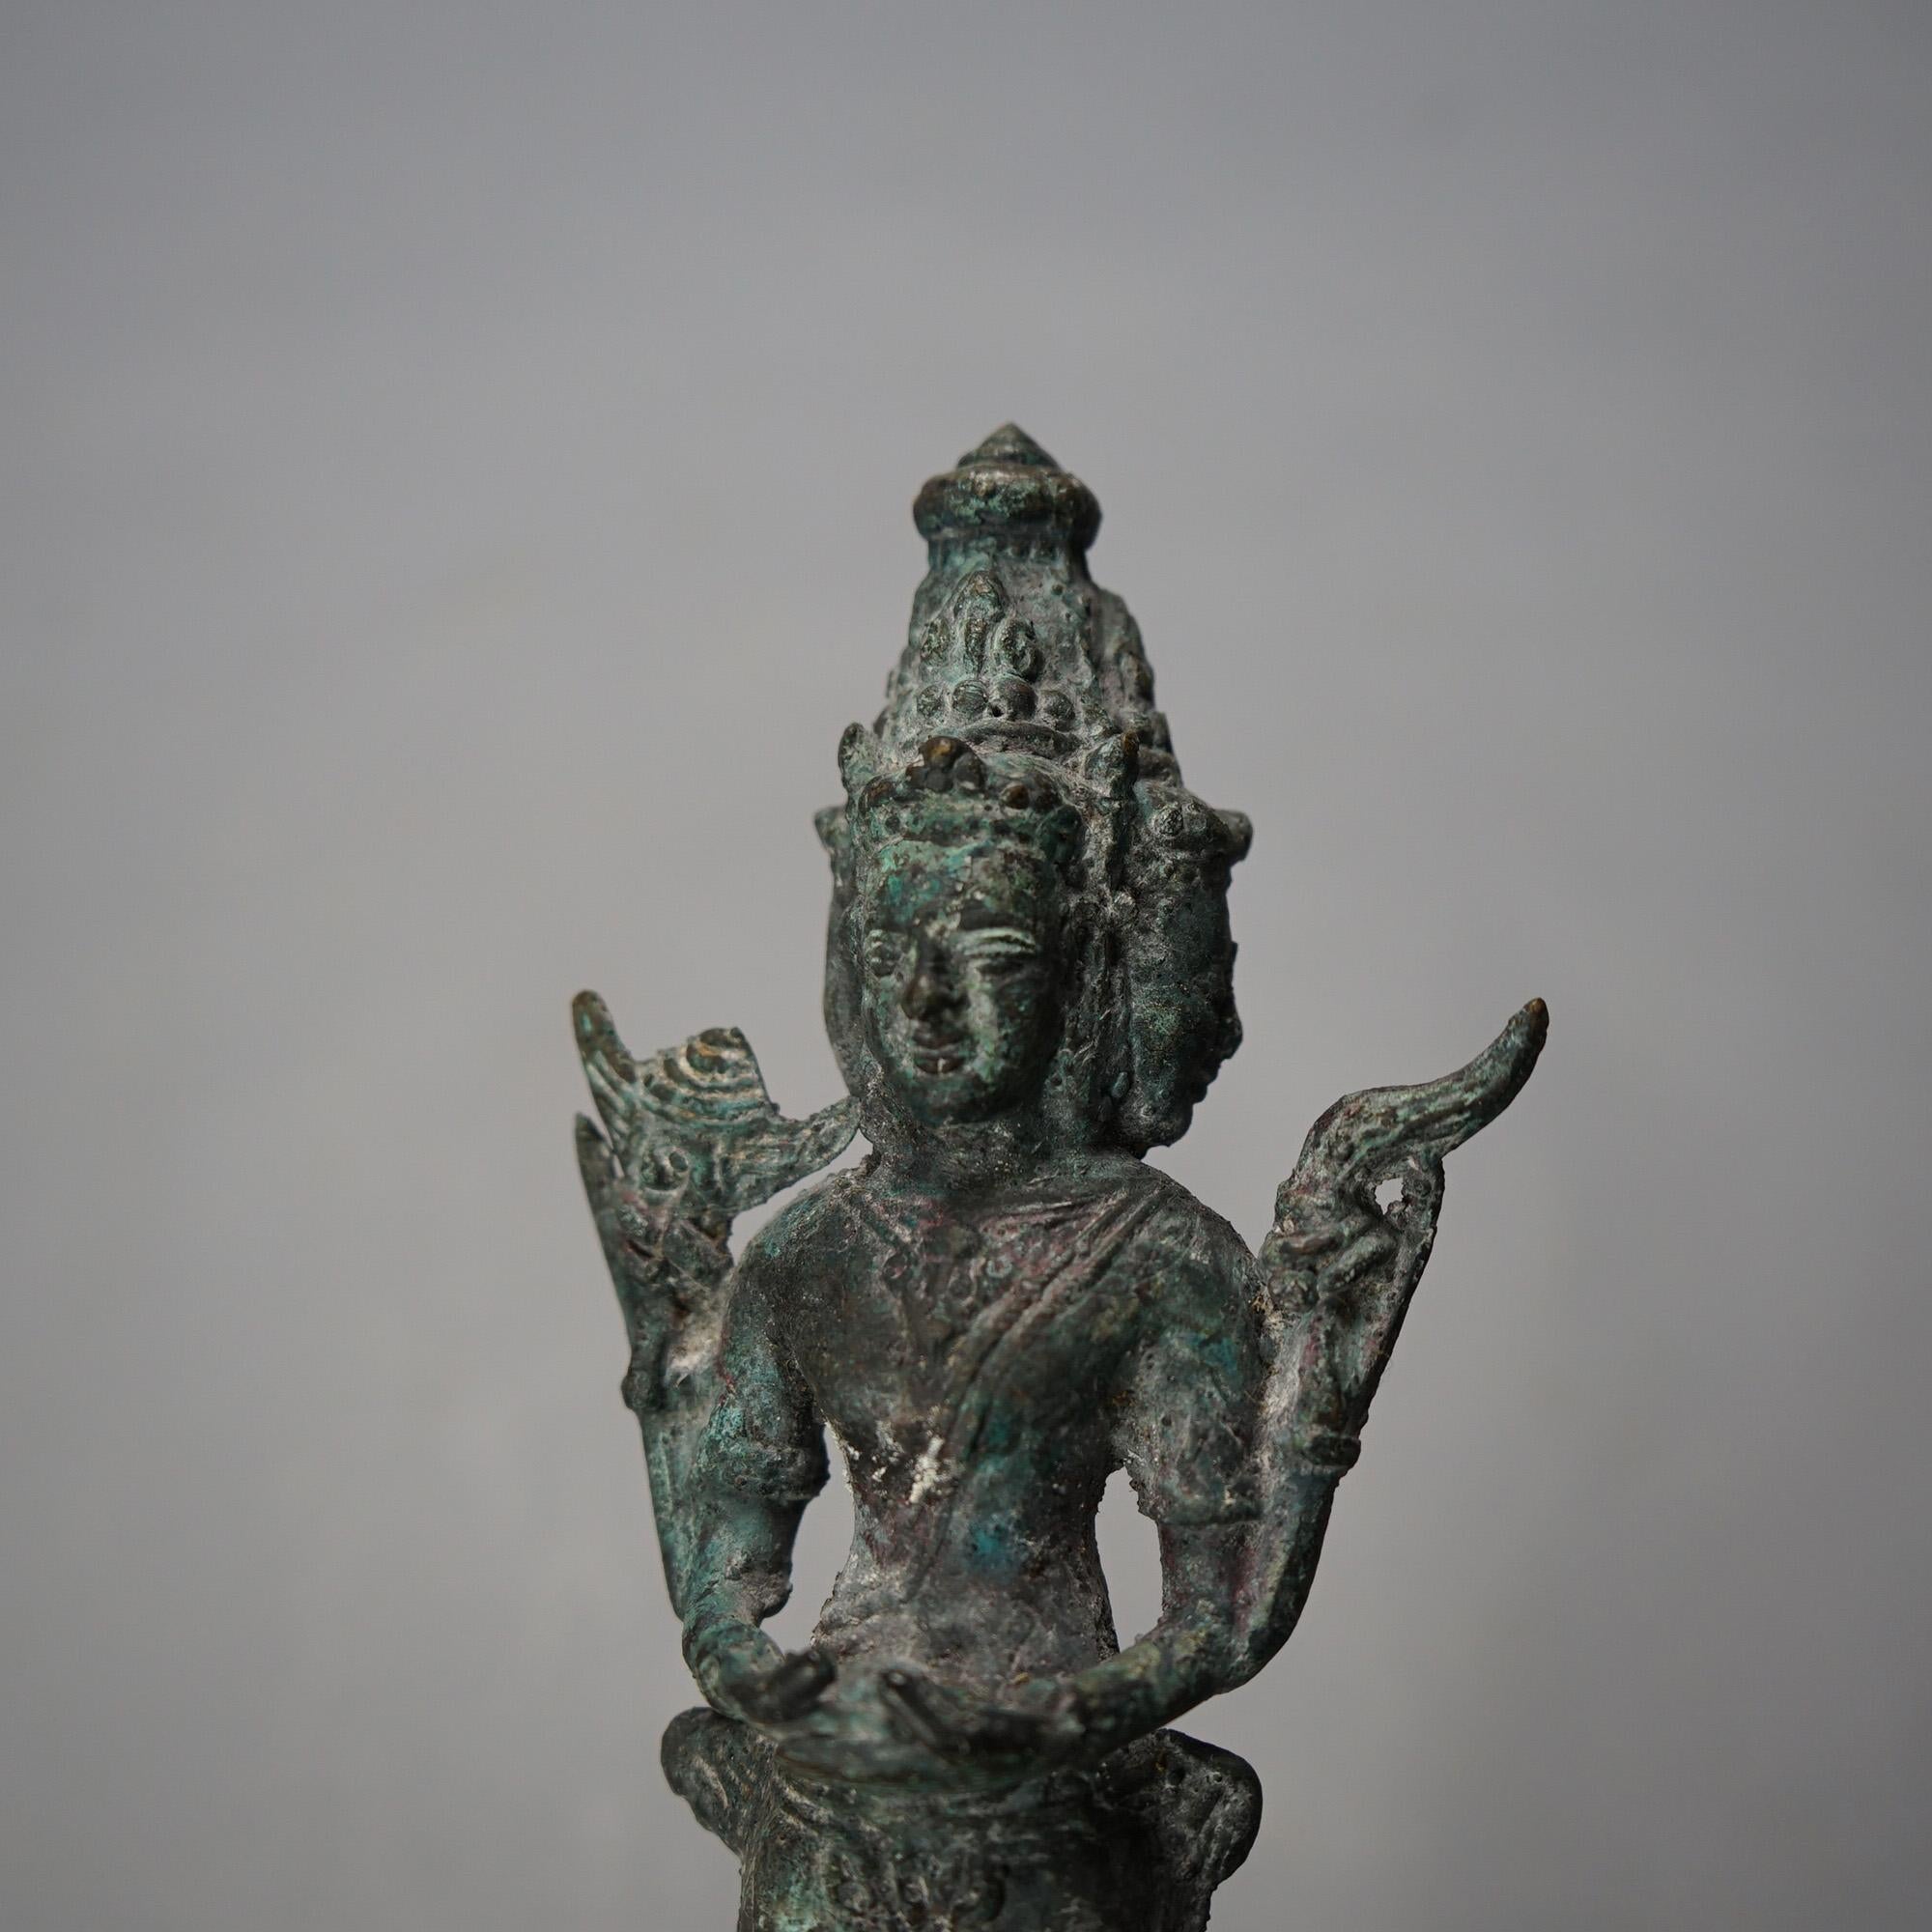 Antique Cast Bronze Tibetan Buddha Shiva Figure 19thC

Measures - 8.75